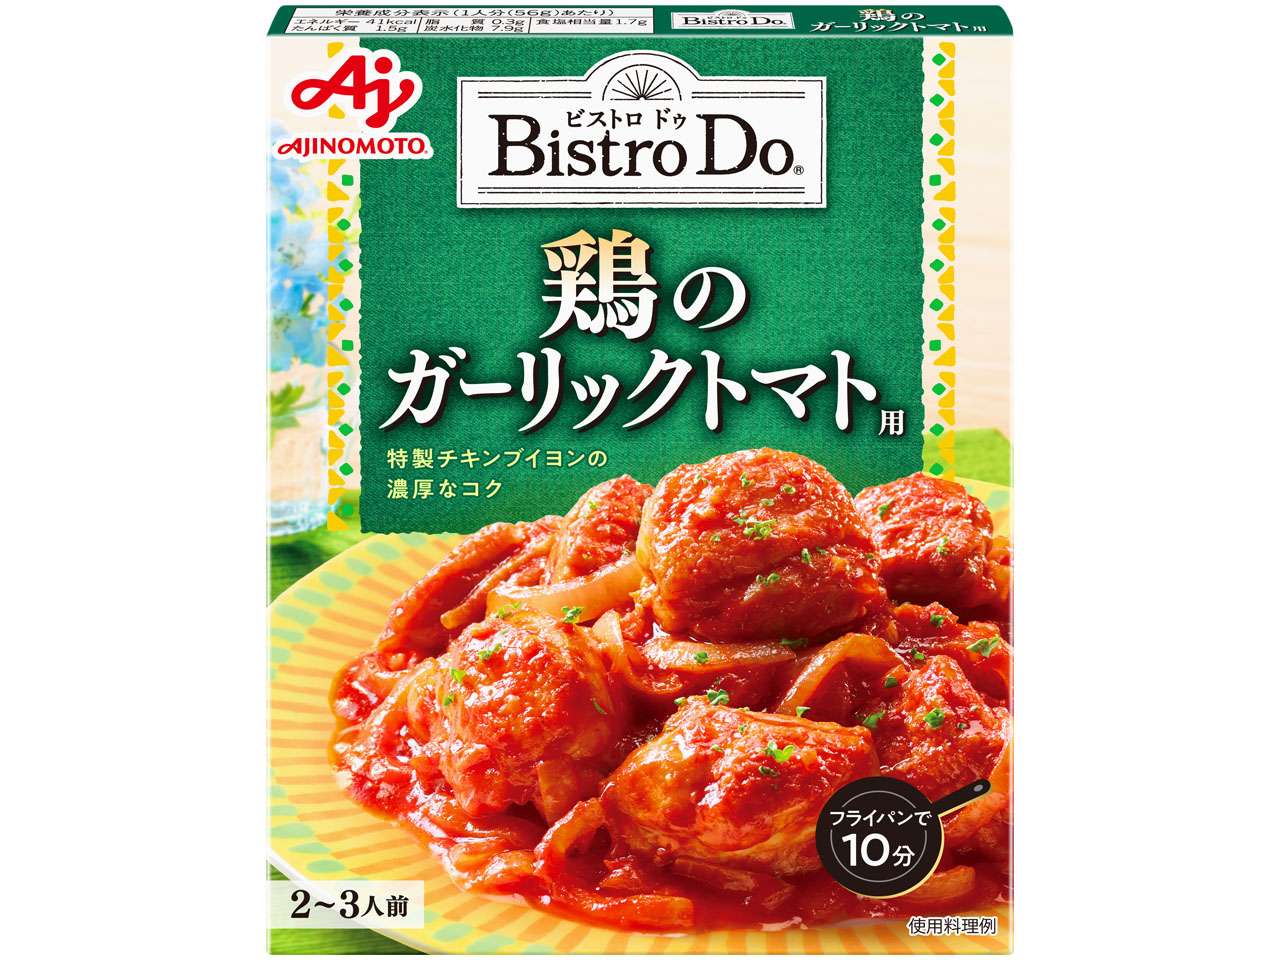 「Bistro Do」鶏のガーリックトマト用